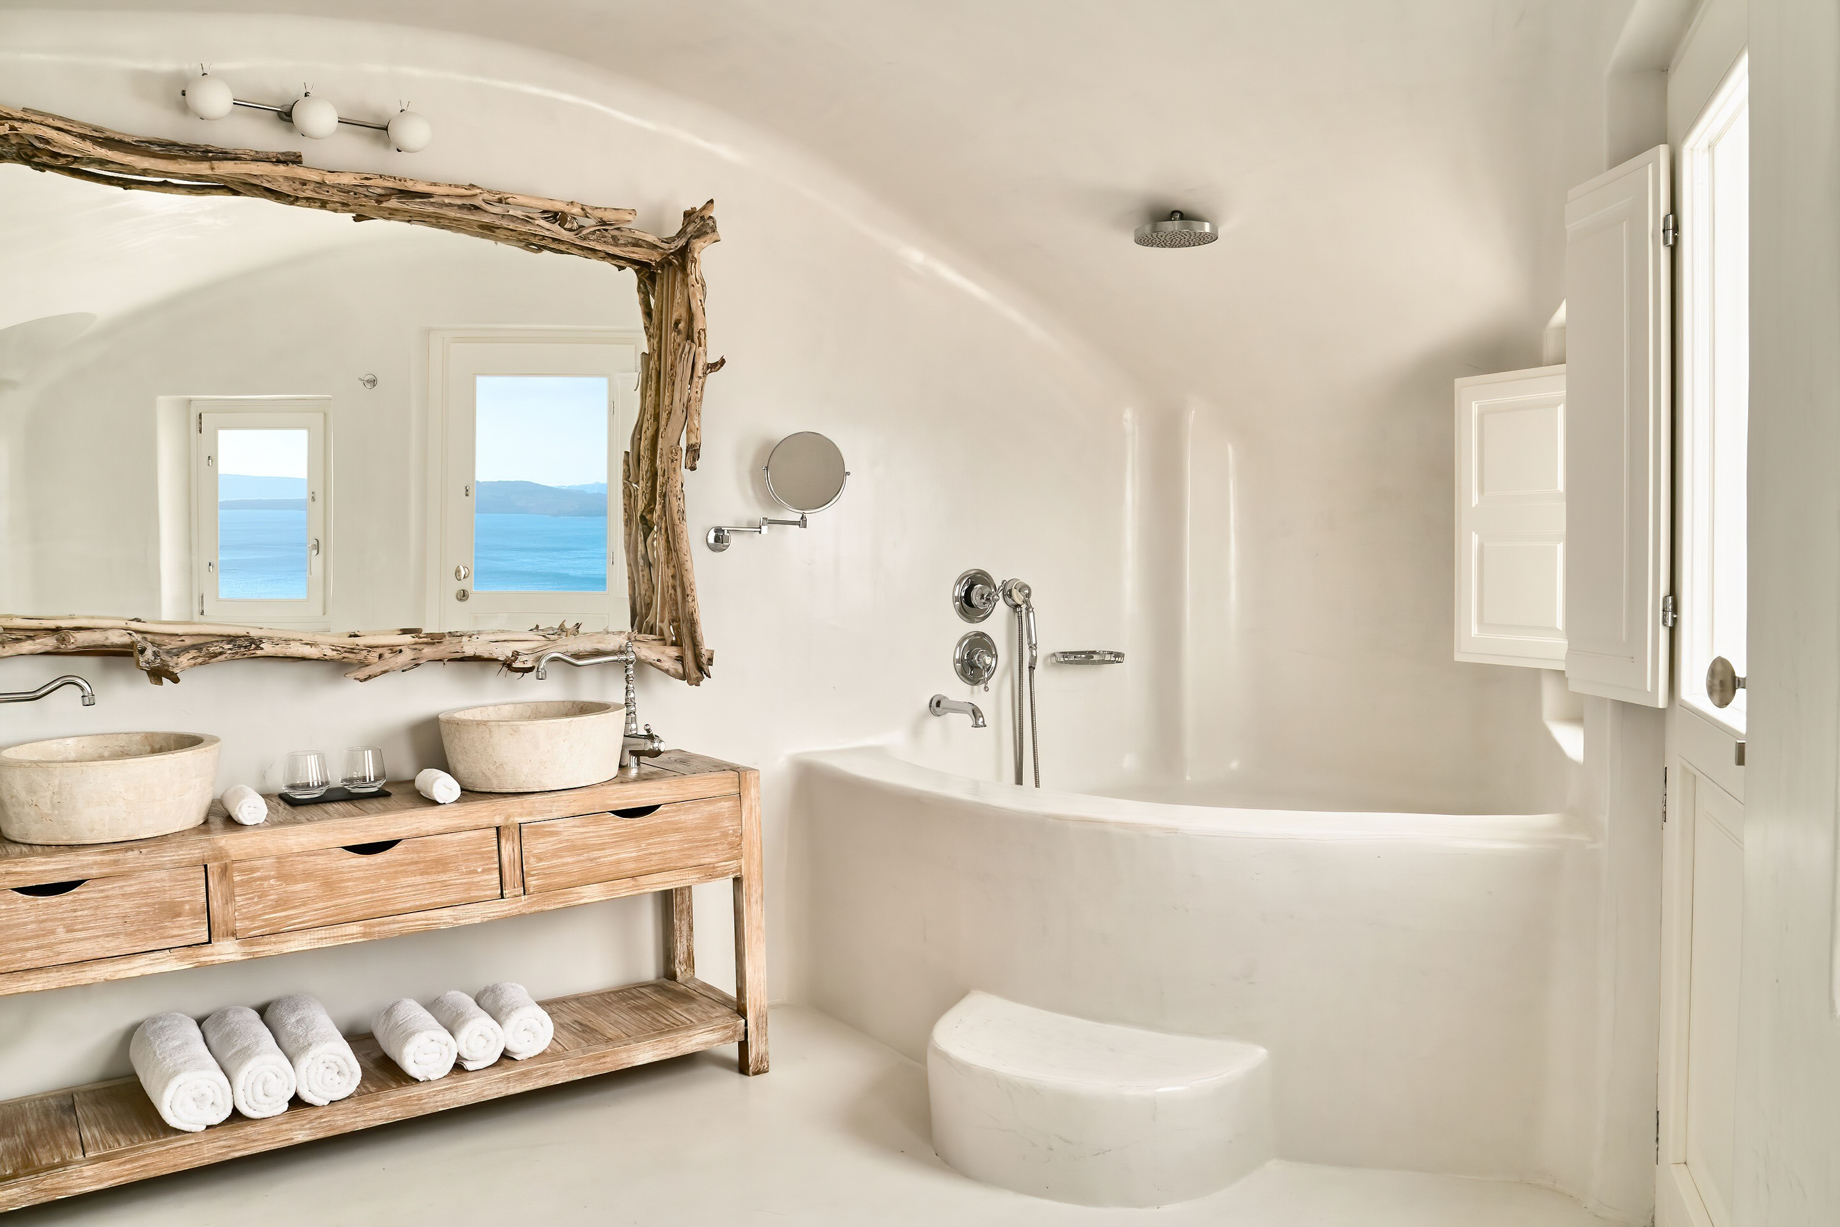 Mystique Hotel Santorini – Oia, Santorini Island, Greece – All2Senses Suite Bathroom